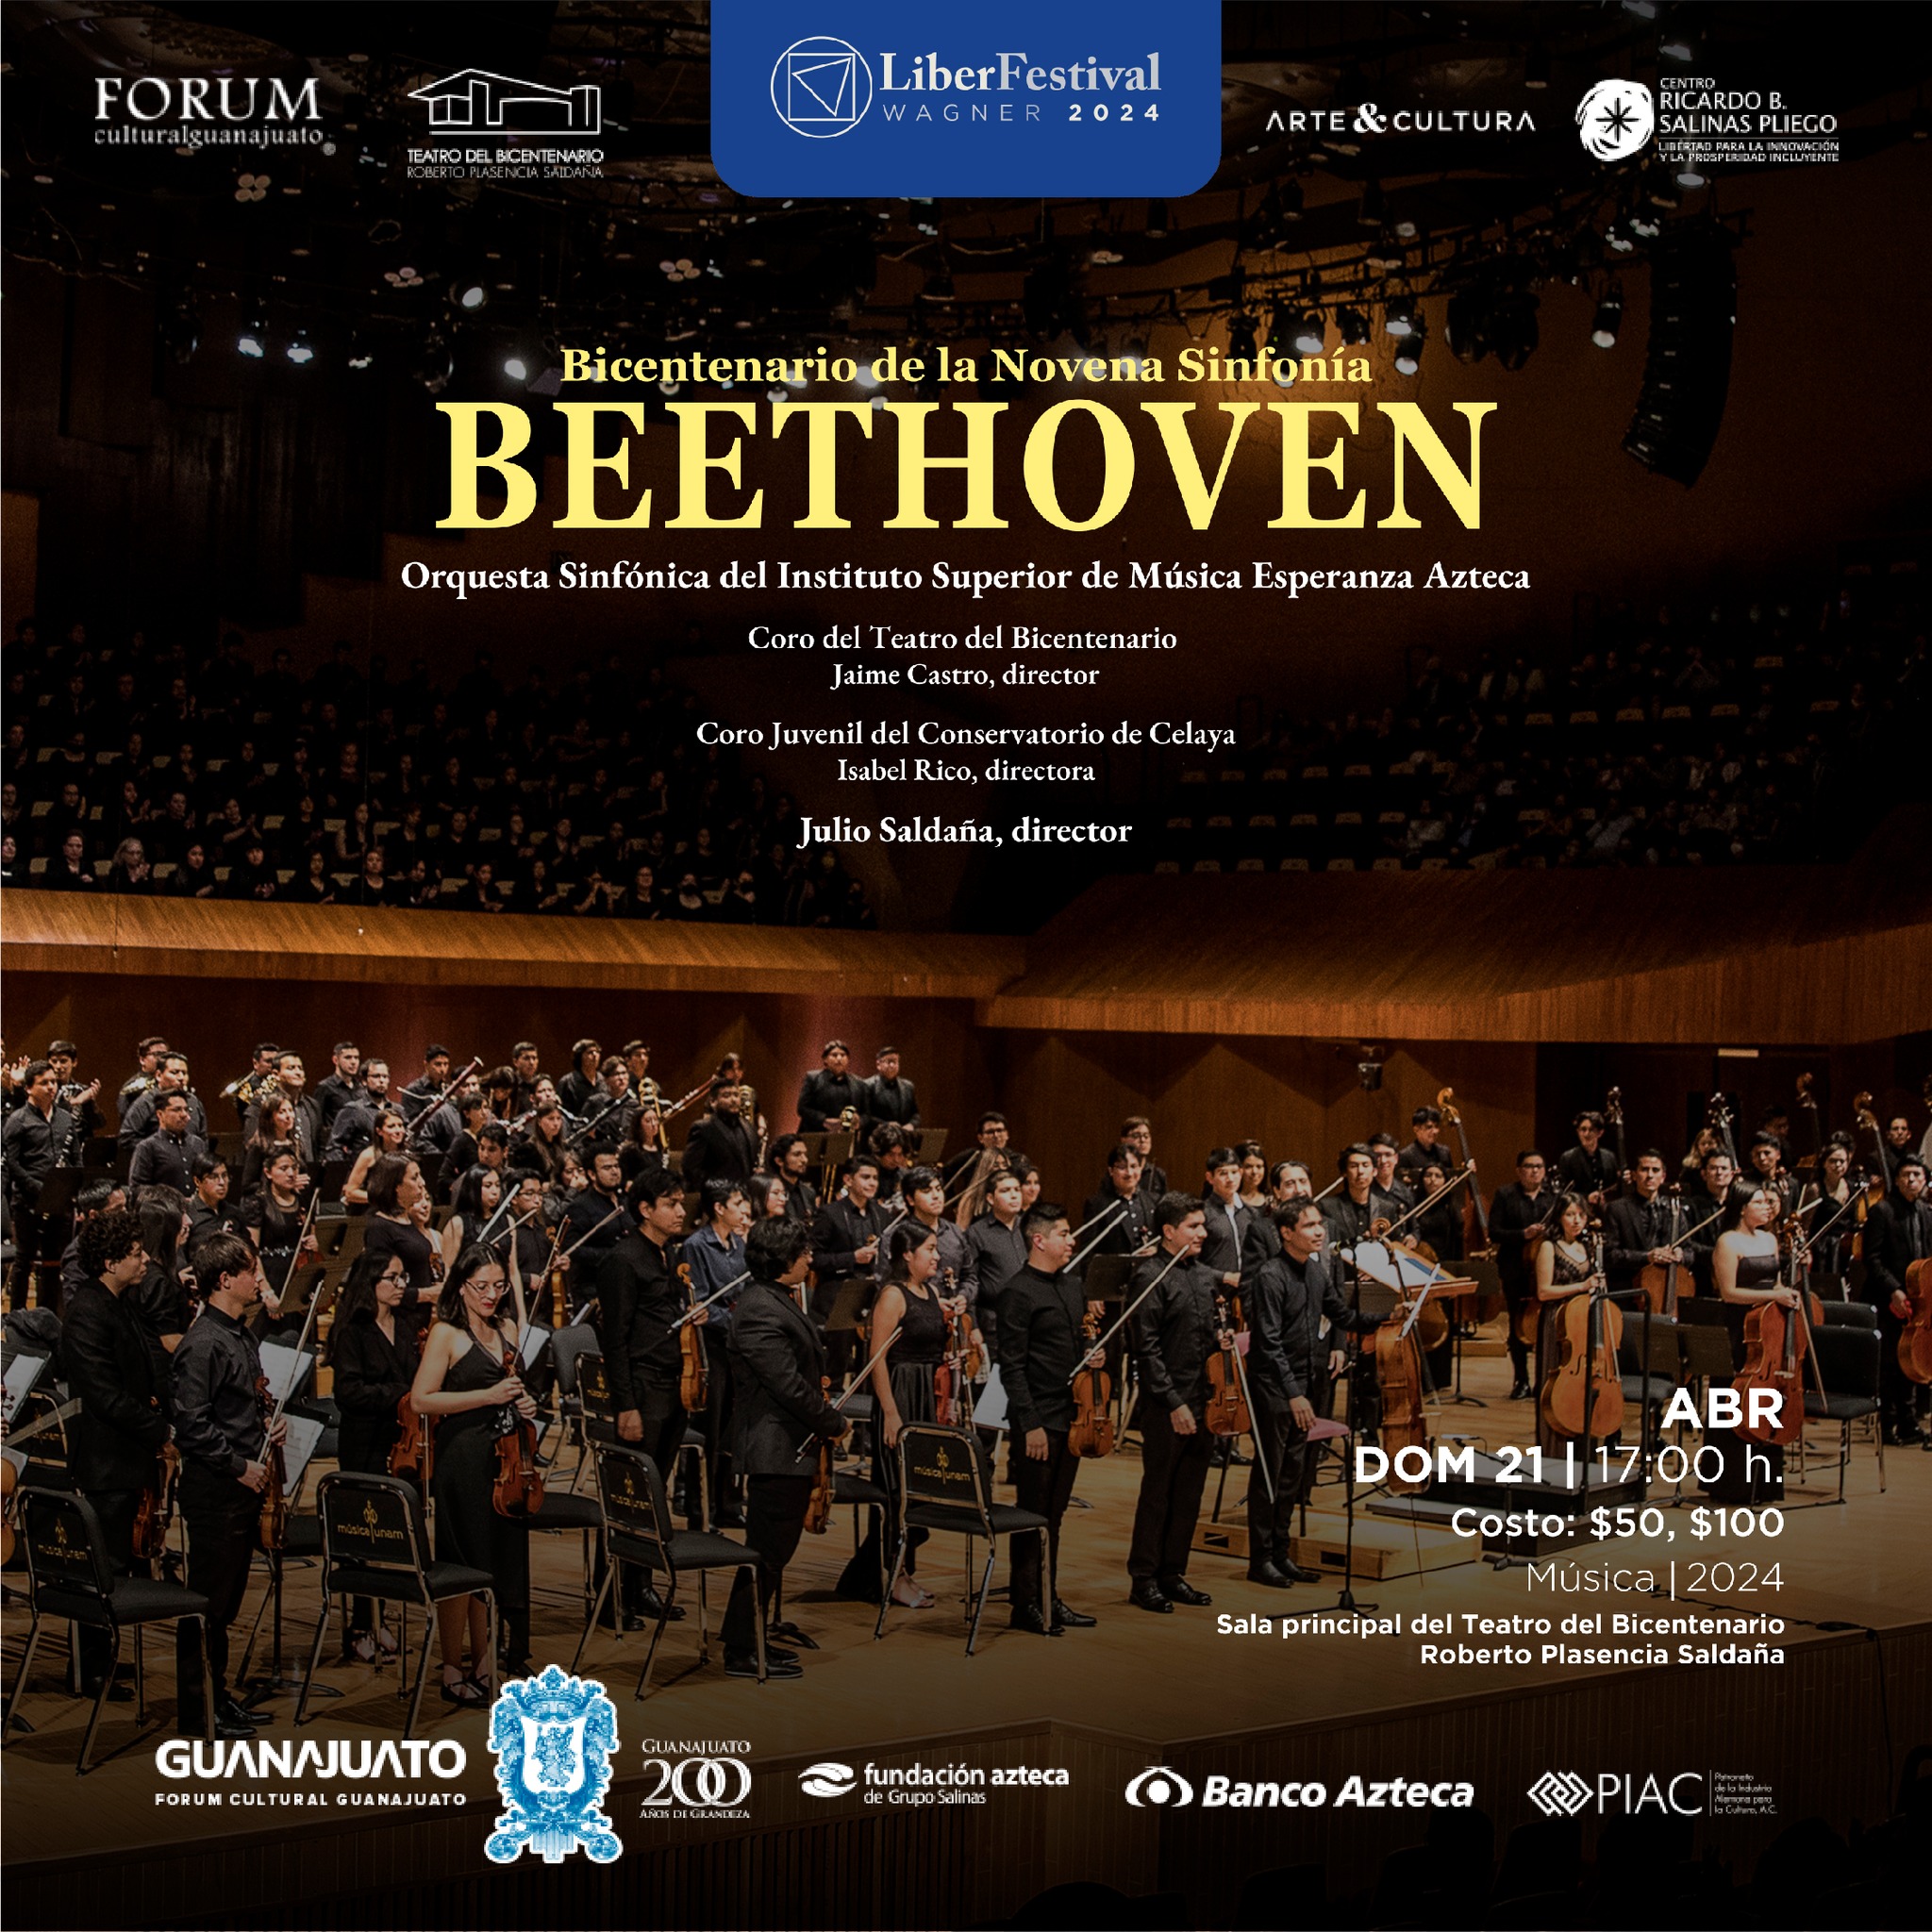 Bicentenario de la Novena Sinfonía Beethoven en LiberFestival 2024